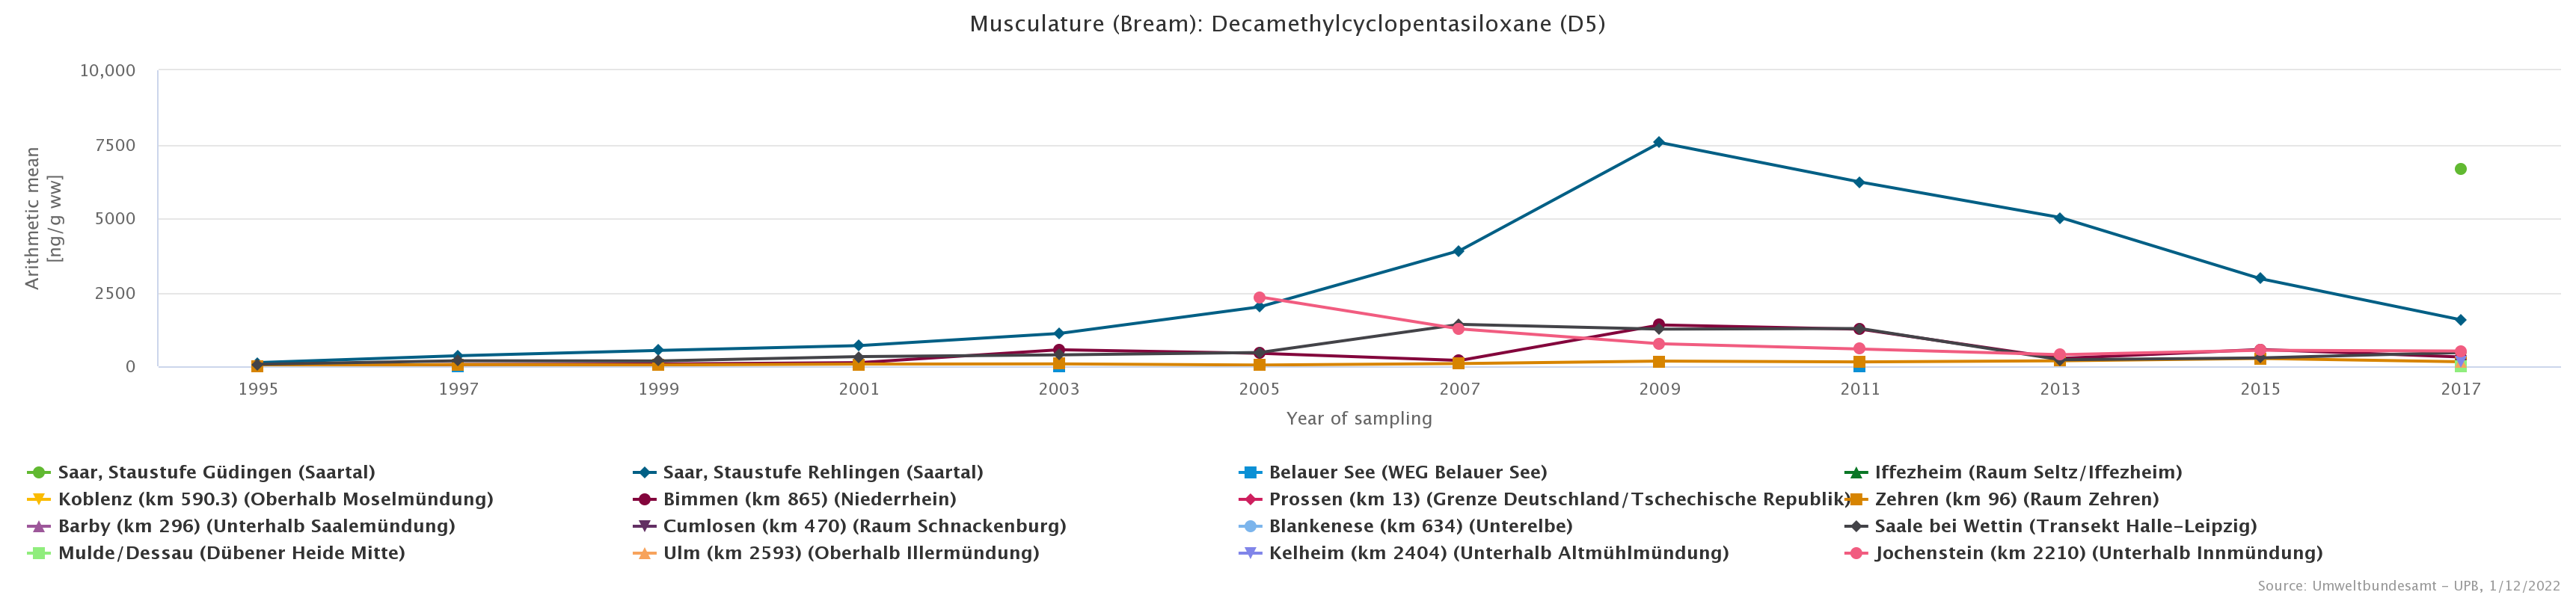 Especially noticeable high concentration of decamethylcyclopentasiloxane in 2009 at the Saar sampling site Staustufe Rehlingen.